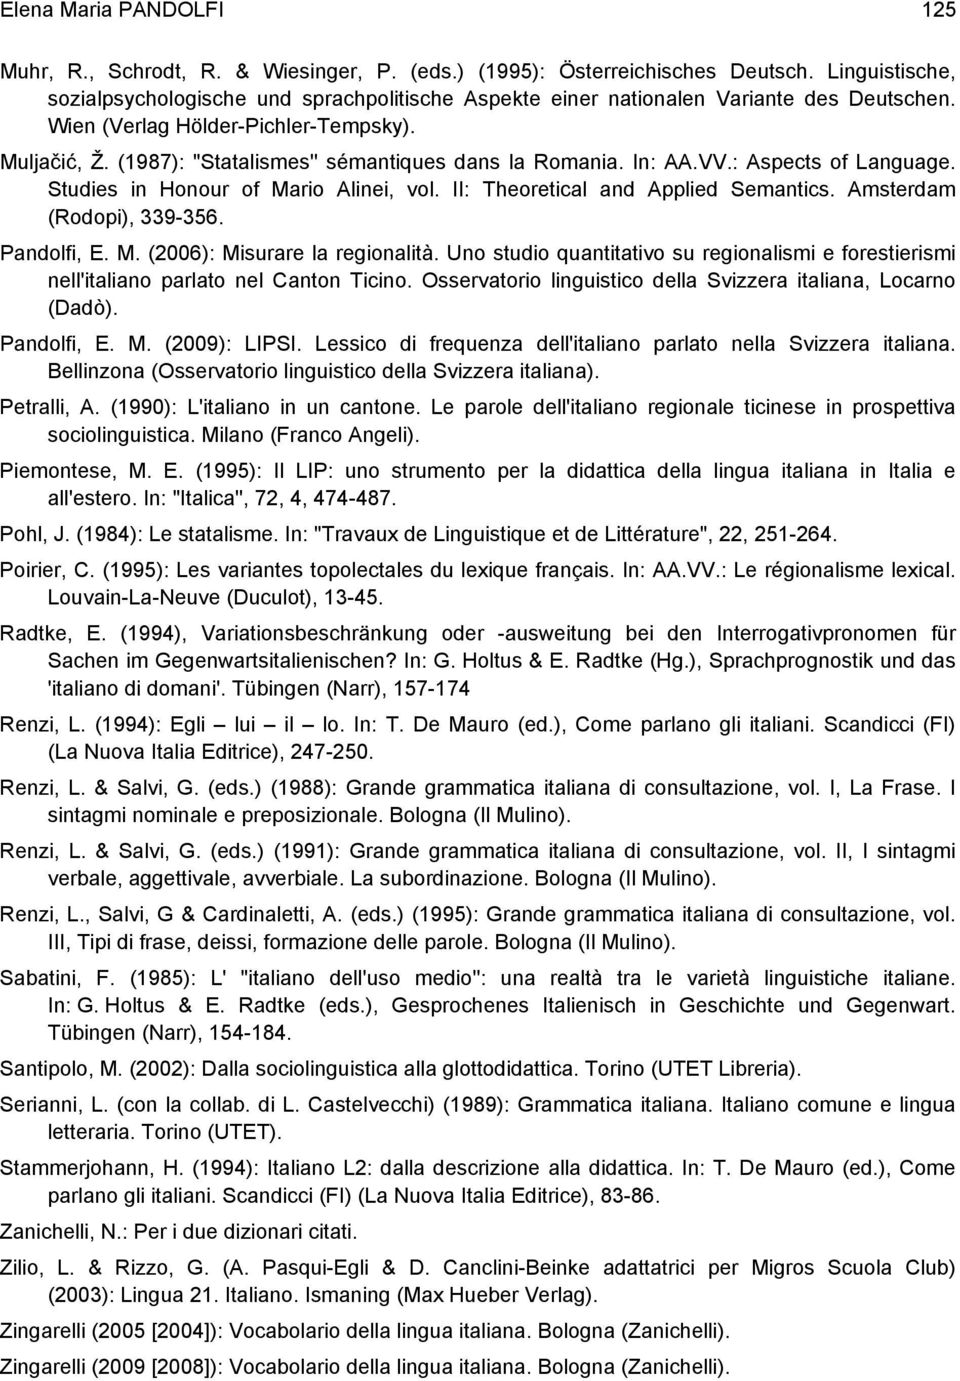 (1987): "Statalismes'' sémantiques dans la Romania. In: AA.VV.: Aspects of Language. Studies in Honour of Mario Alinei, vol. II: Theoretical and Applied Semantics. Amsterdam (Rodopi), 339-356.